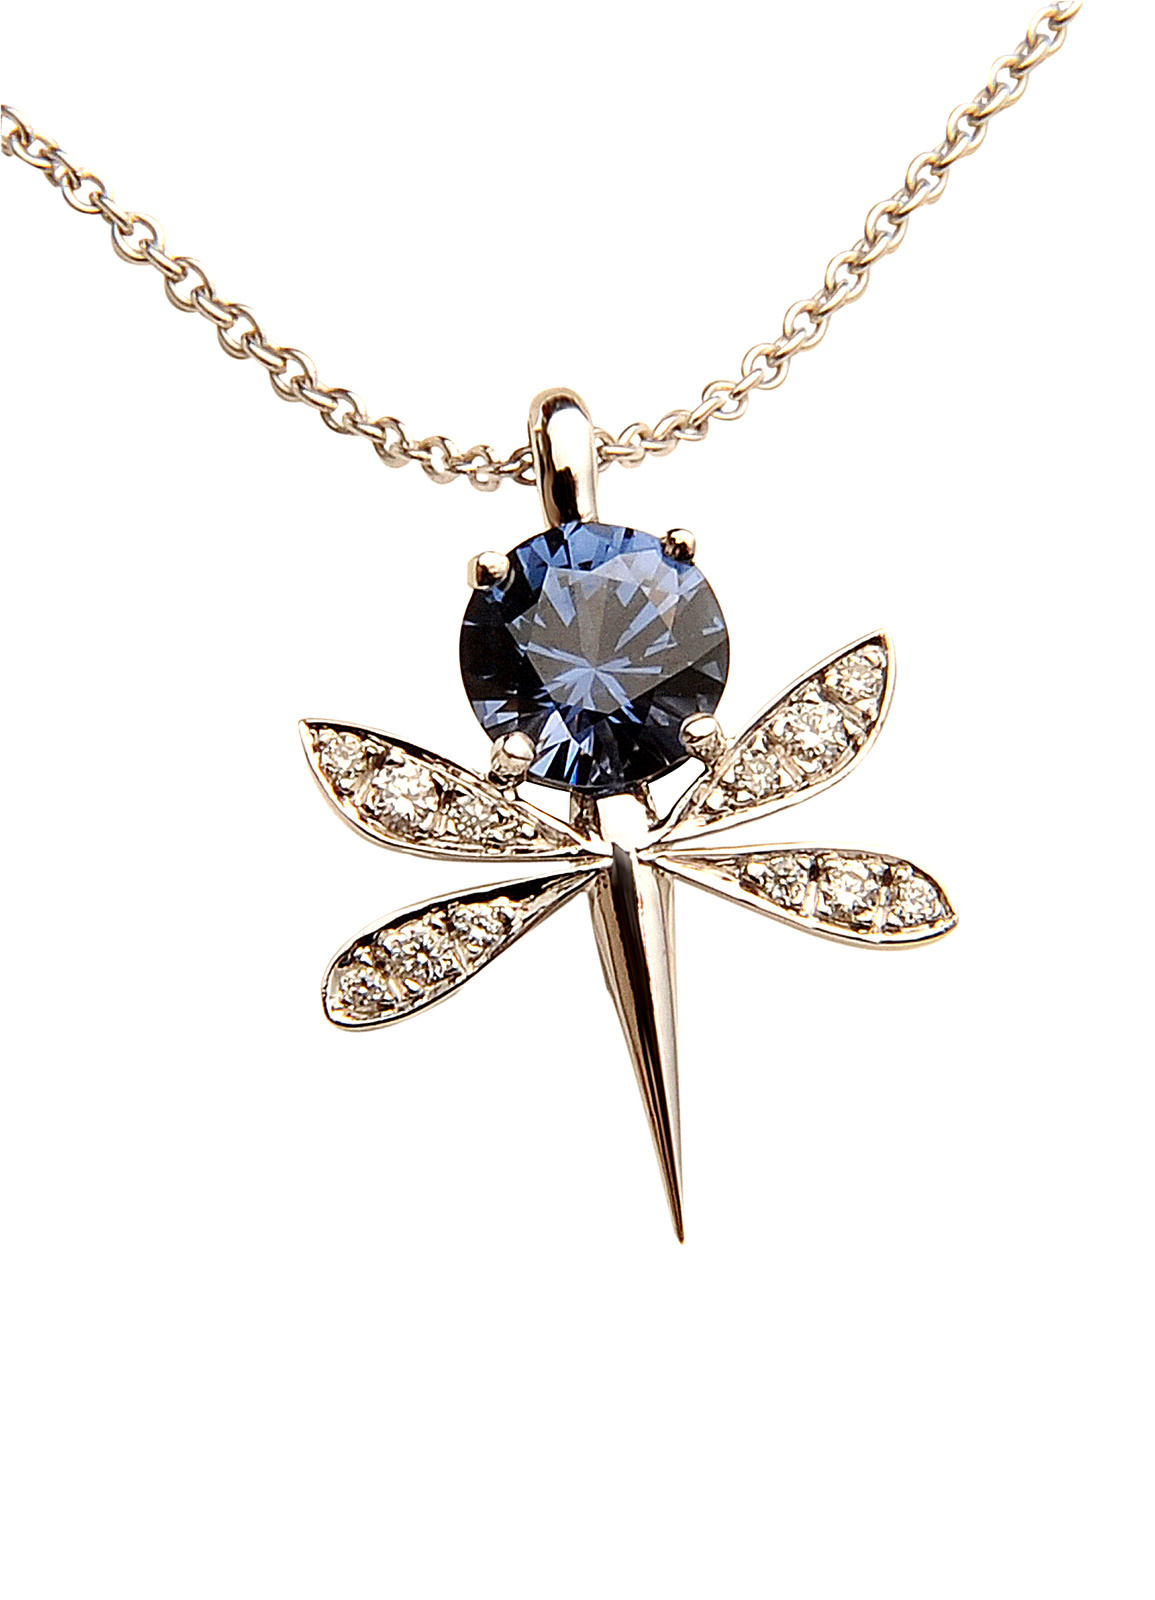 Pendentif Libellule,or blanc, spinelle bleu, diamants © Tiber